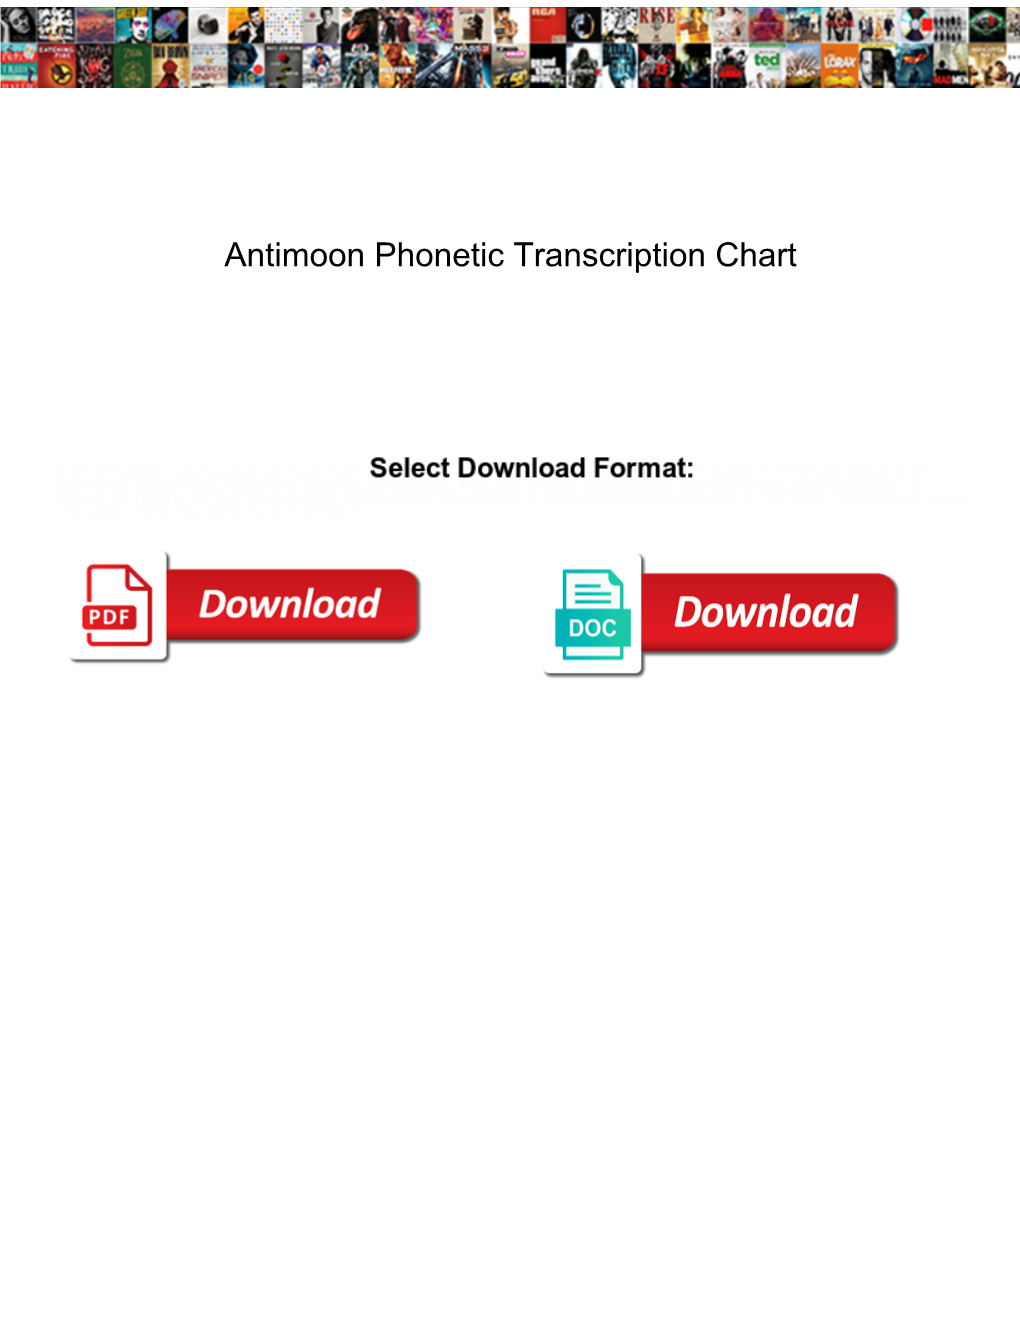 Antimoon Phonetic Transcription Chart